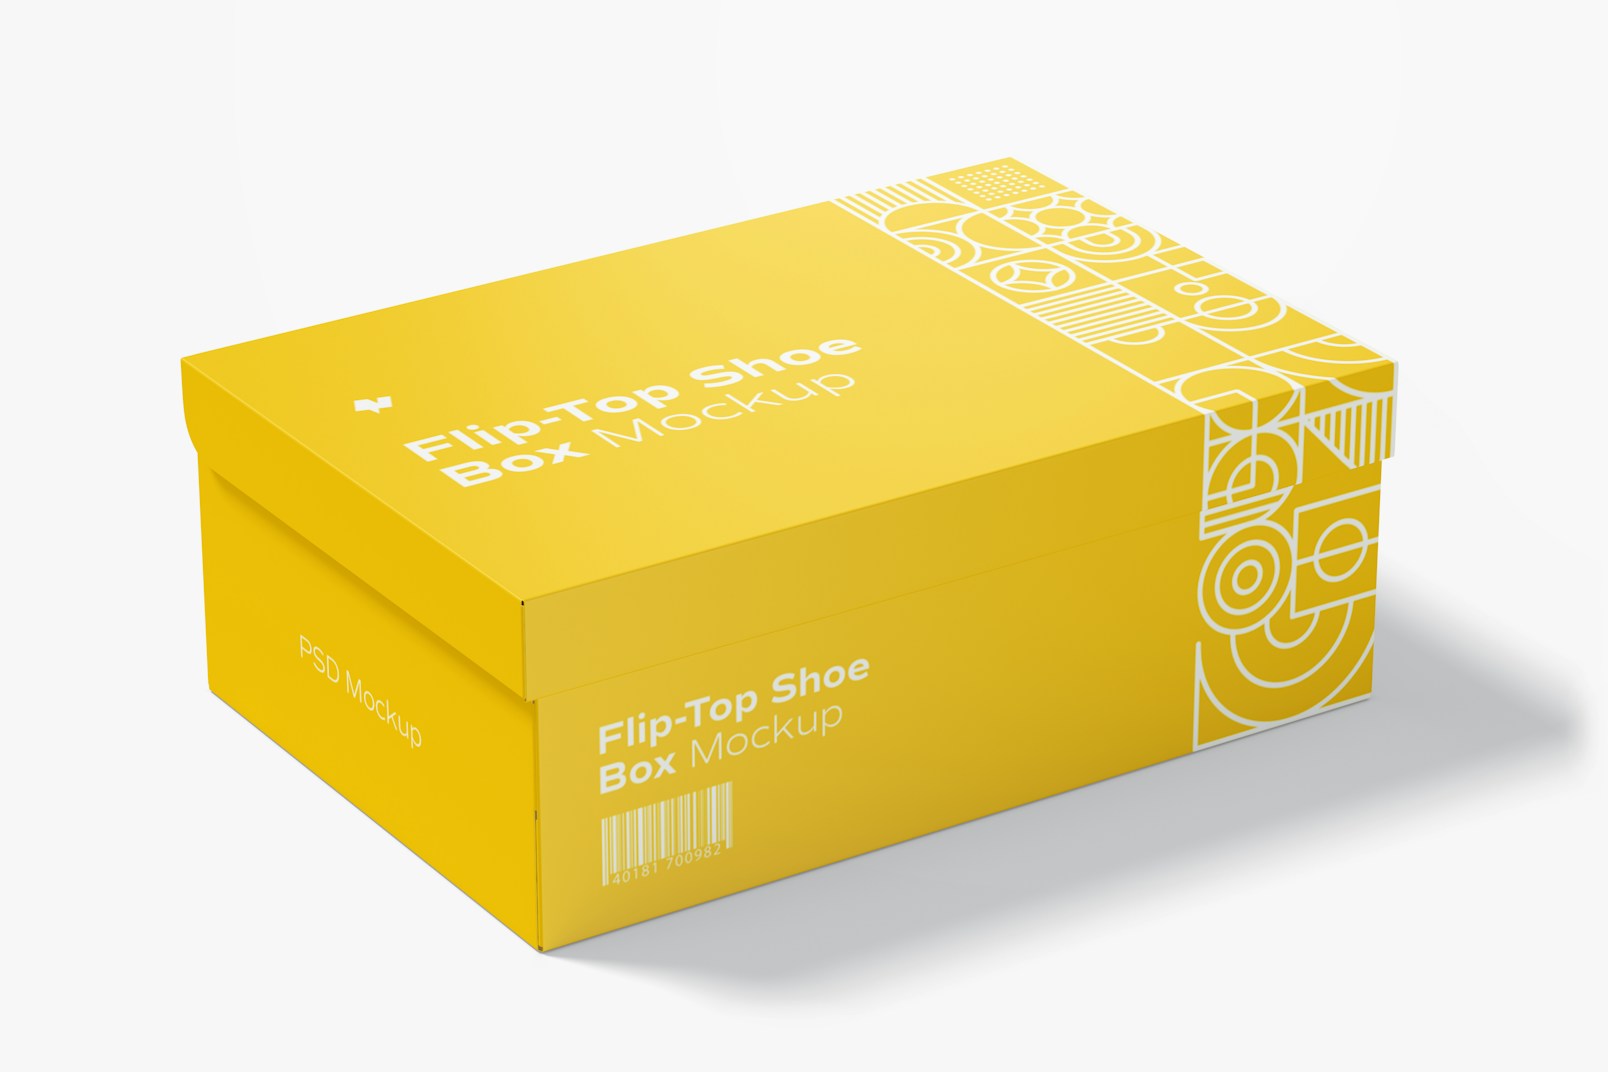 Flip-Top Shoe Box Mockup